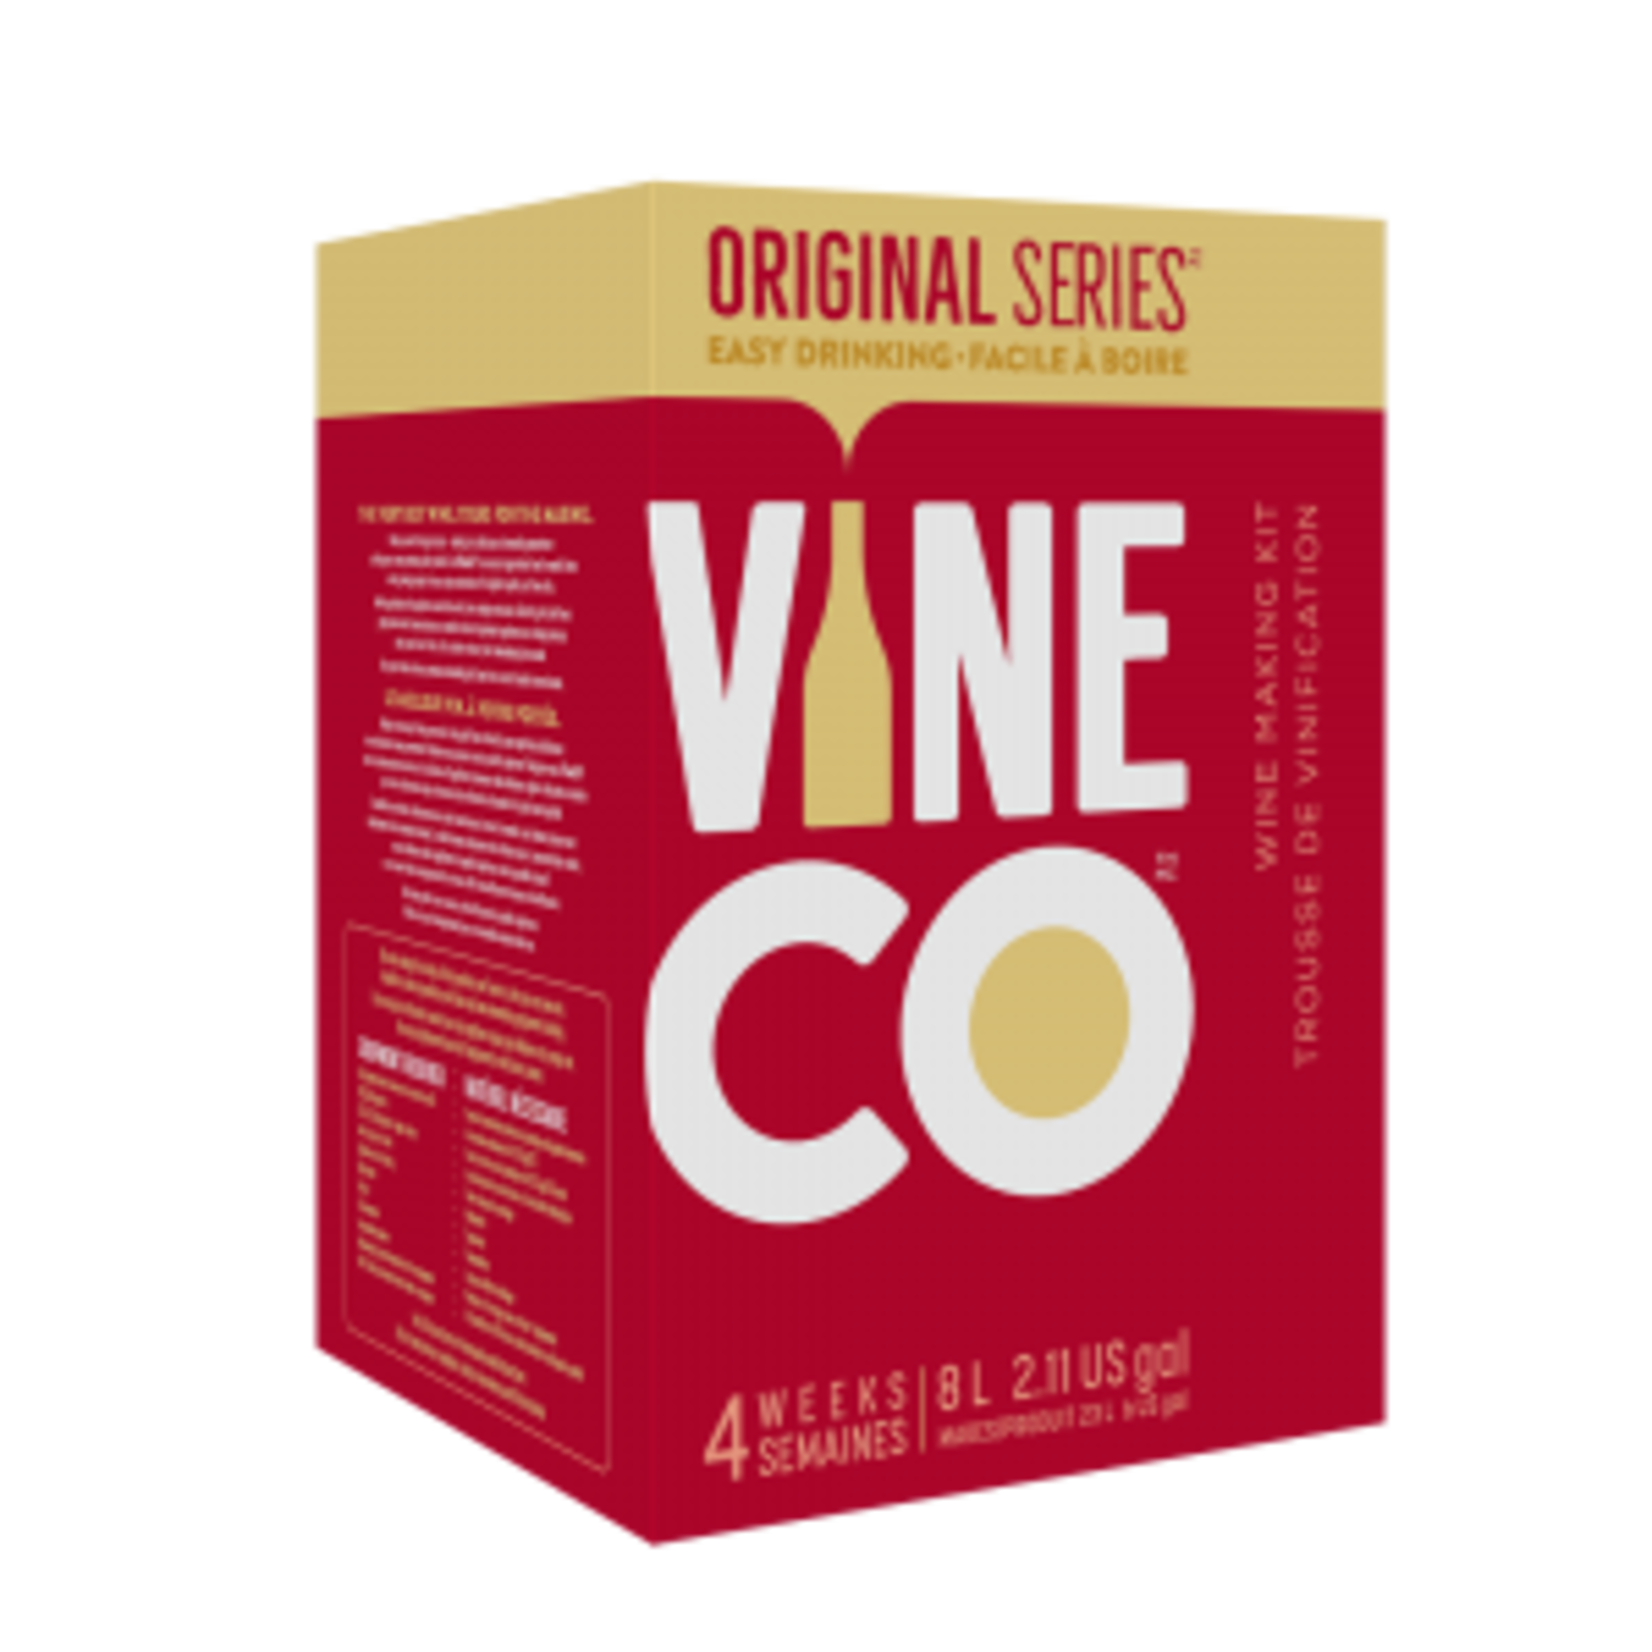 Vine Co. Original Series Sangiovese (Wine Kit), Italy